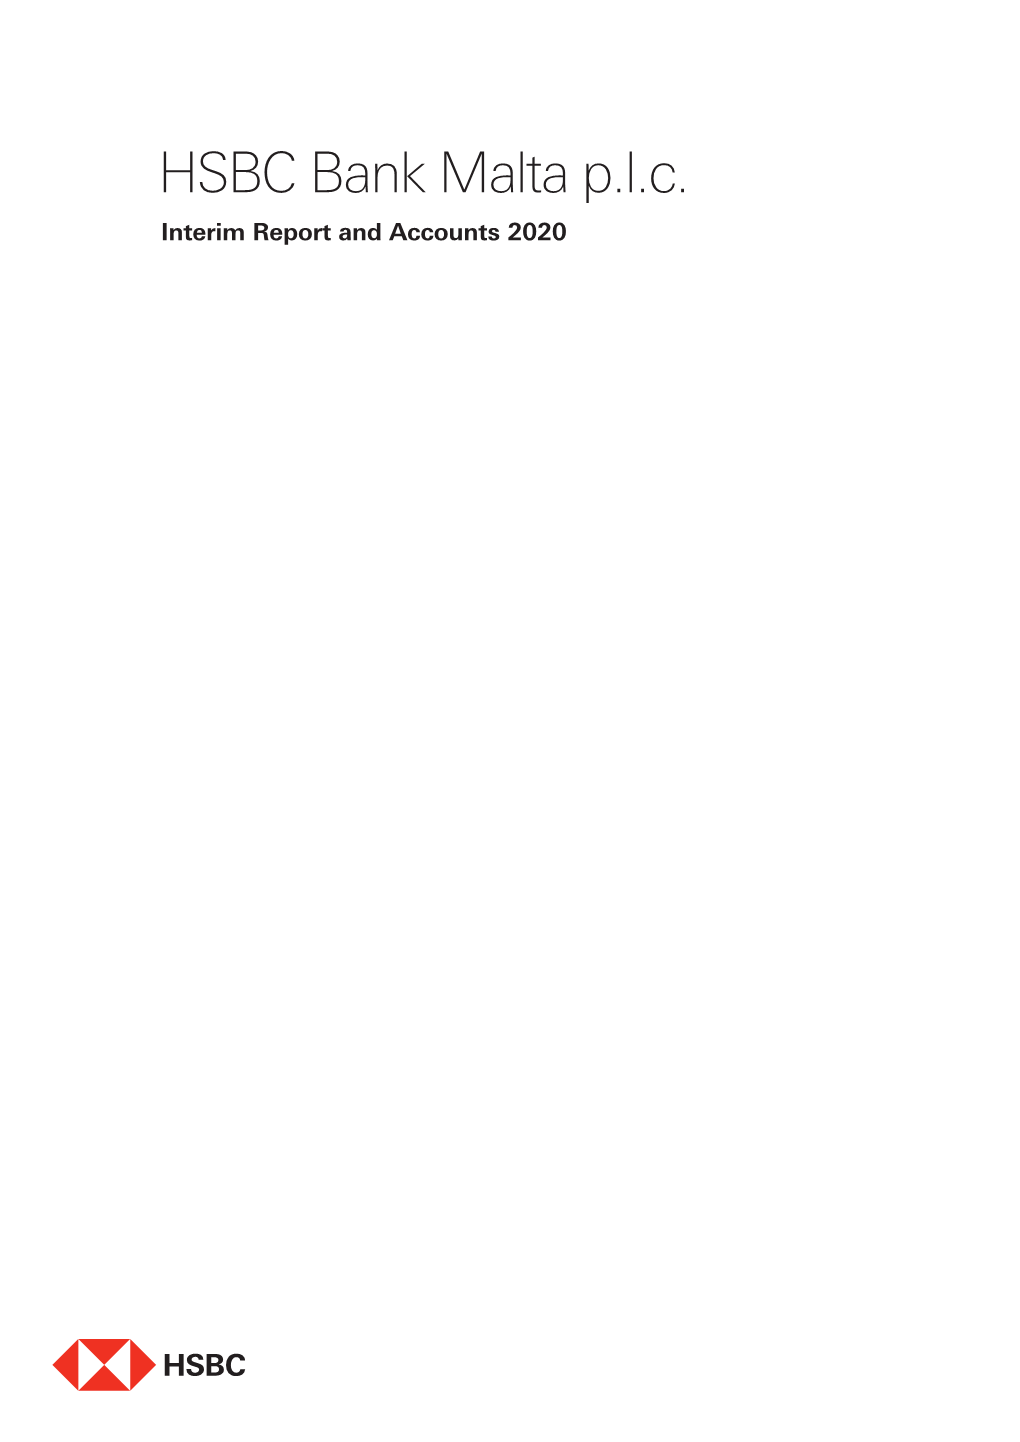 Interim Report and Accounts 2020 COMPANY ANNOUNCEMENT